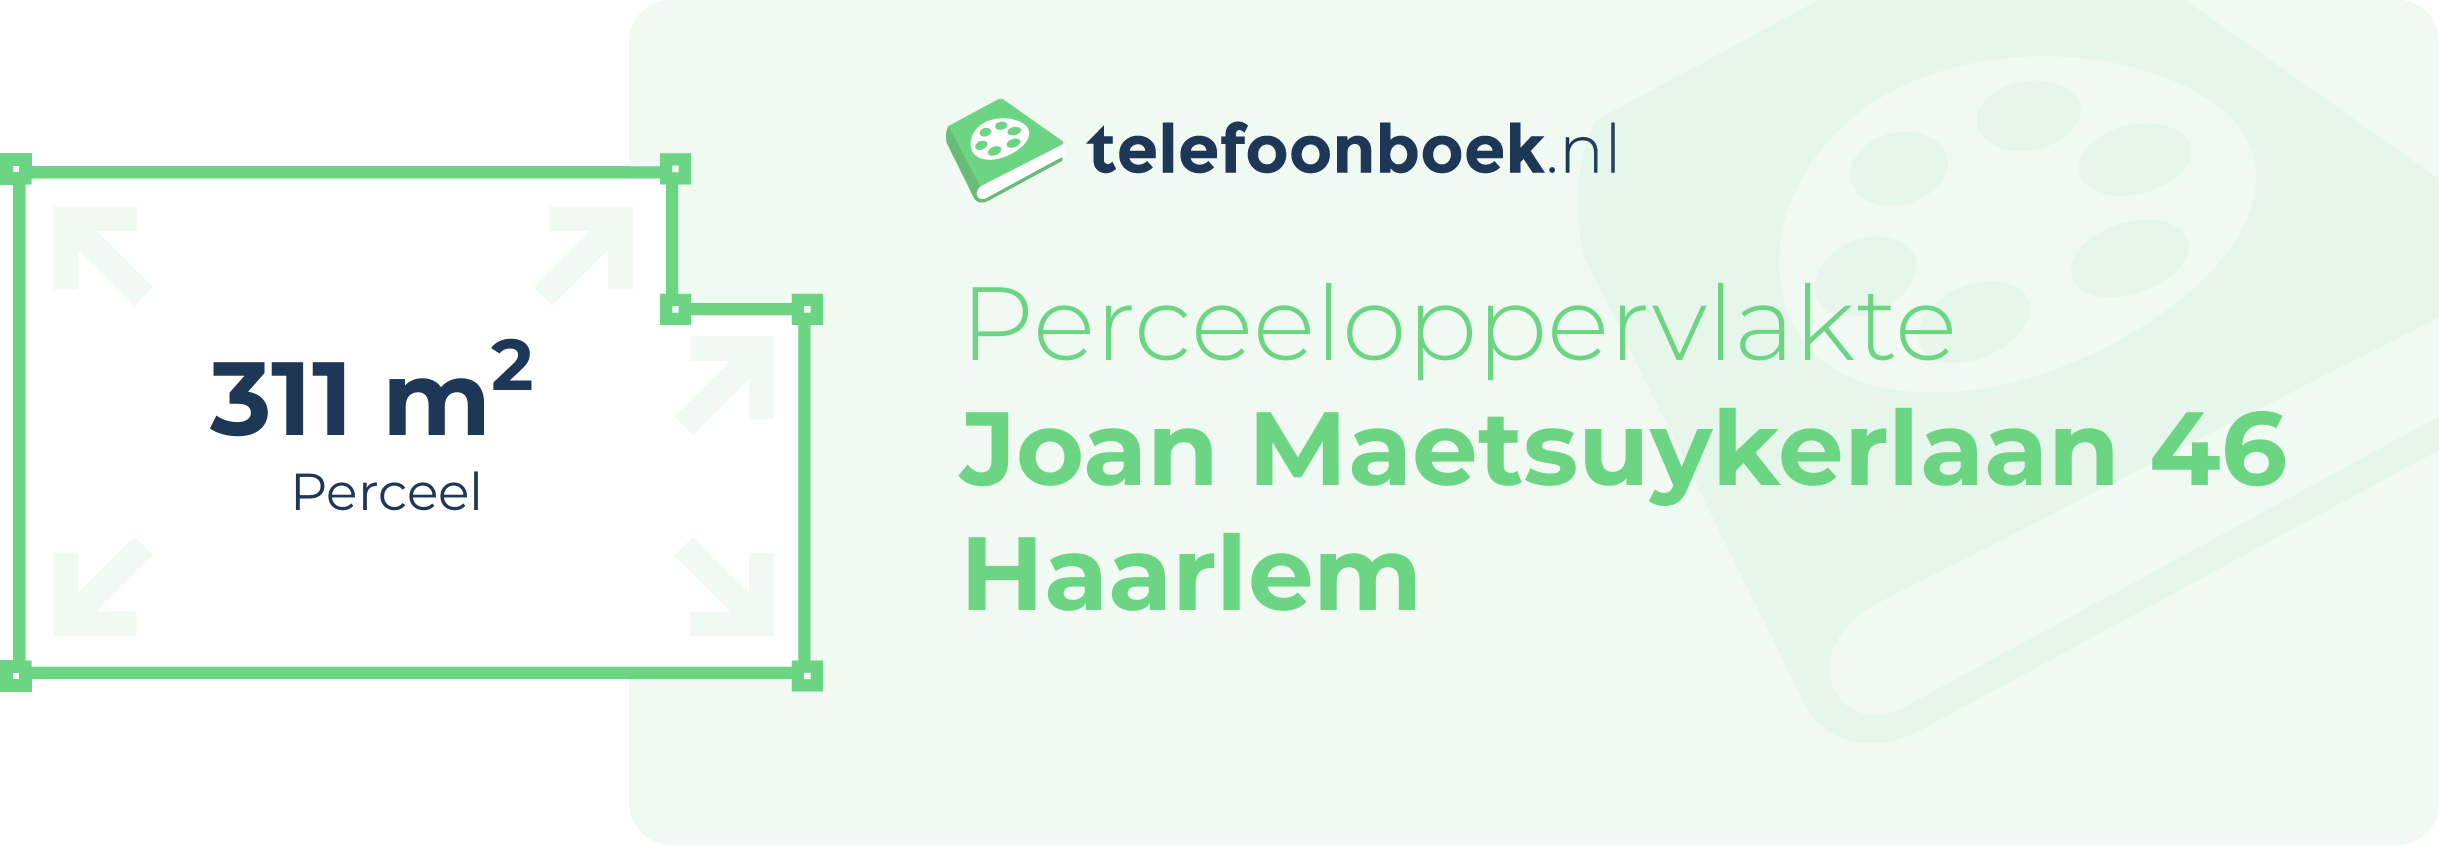 Perceeloppervlakte Joan Maetsuykerlaan 46 Haarlem